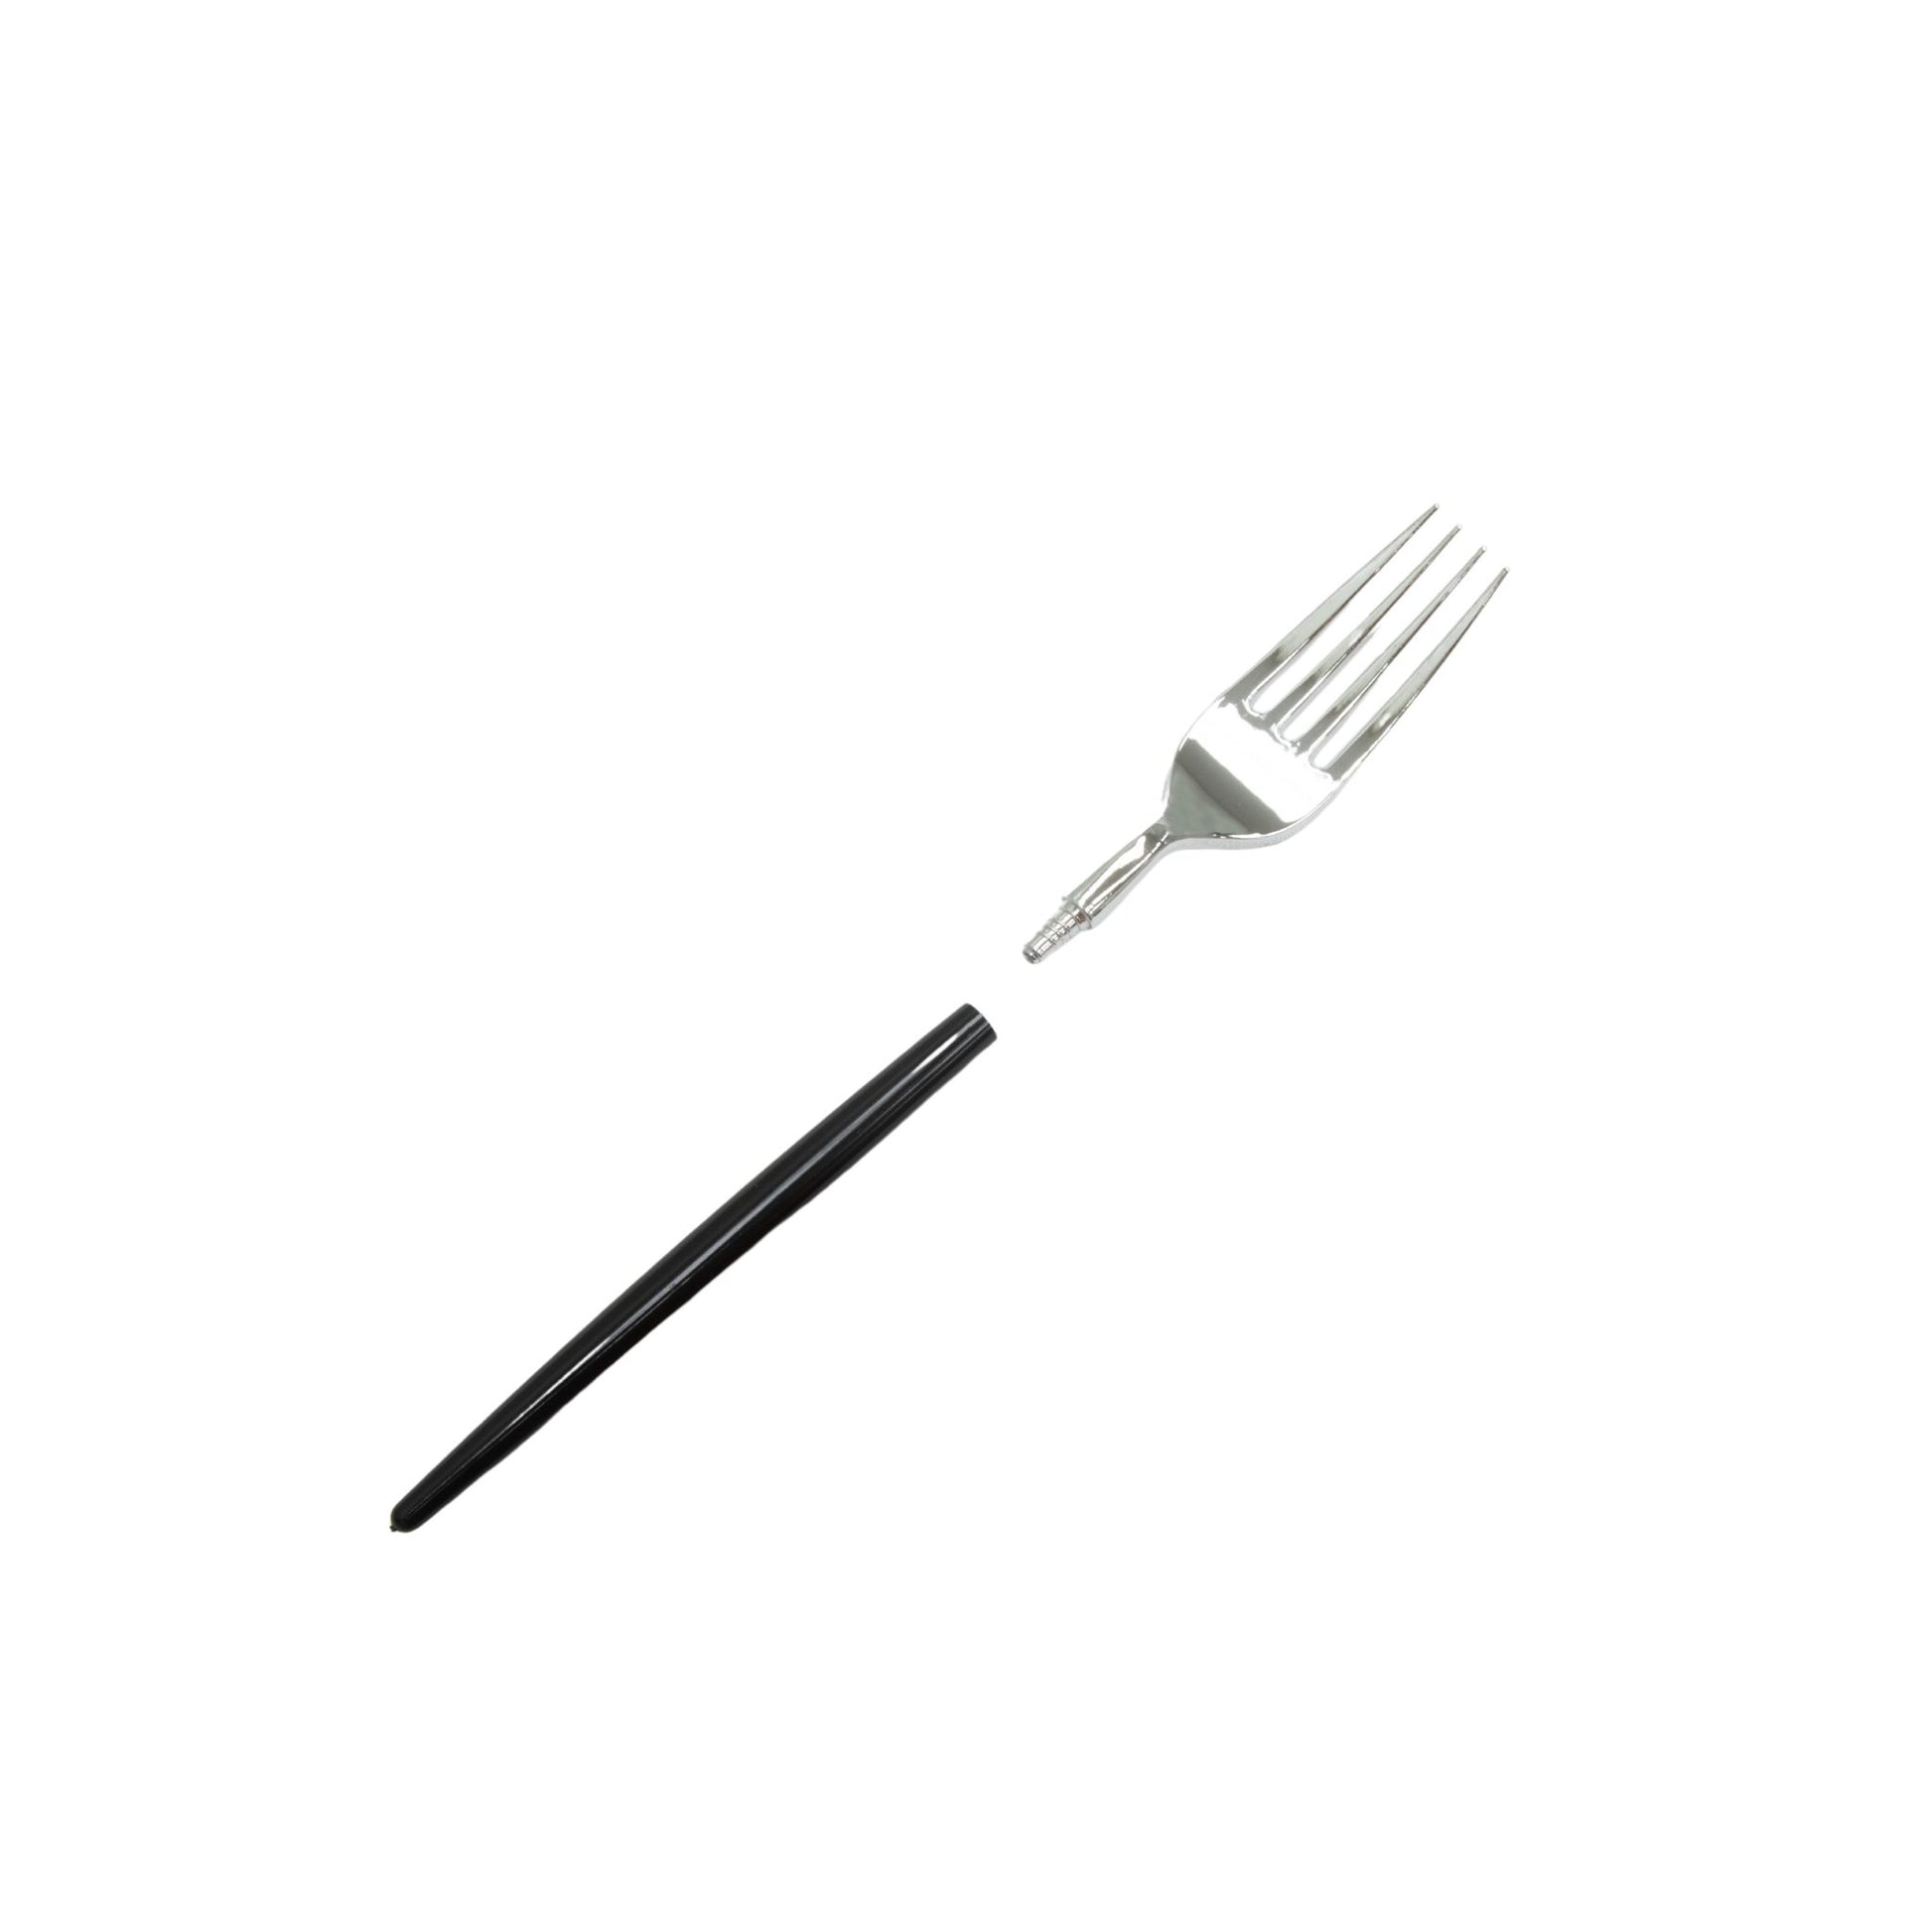 Black Plastic Cutlery Set 60pcs/pk - Silver Mod Collection